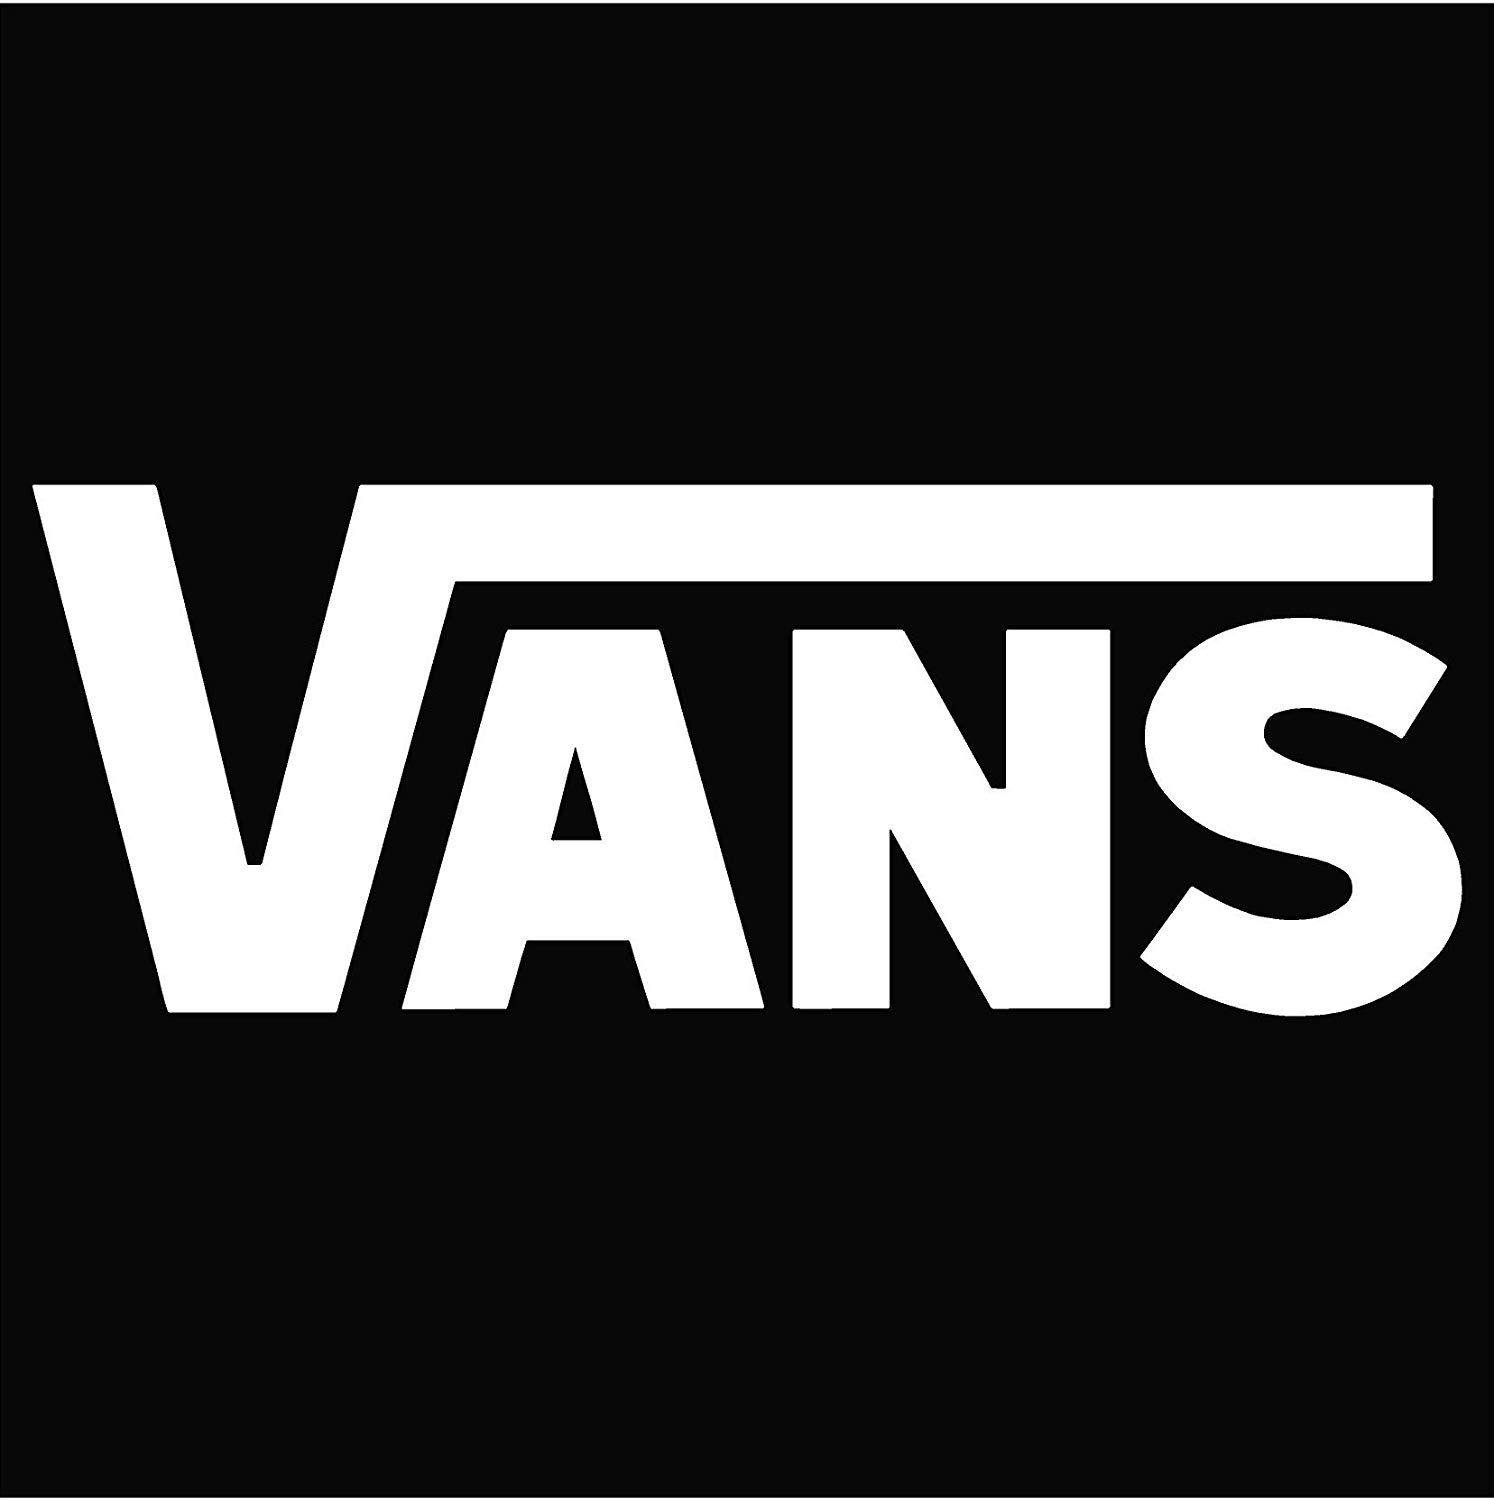 White Vans Logo - Amazon.com: Vans Logo Vinyl Sticker Decal Decal-White-6 Inch: Automotive